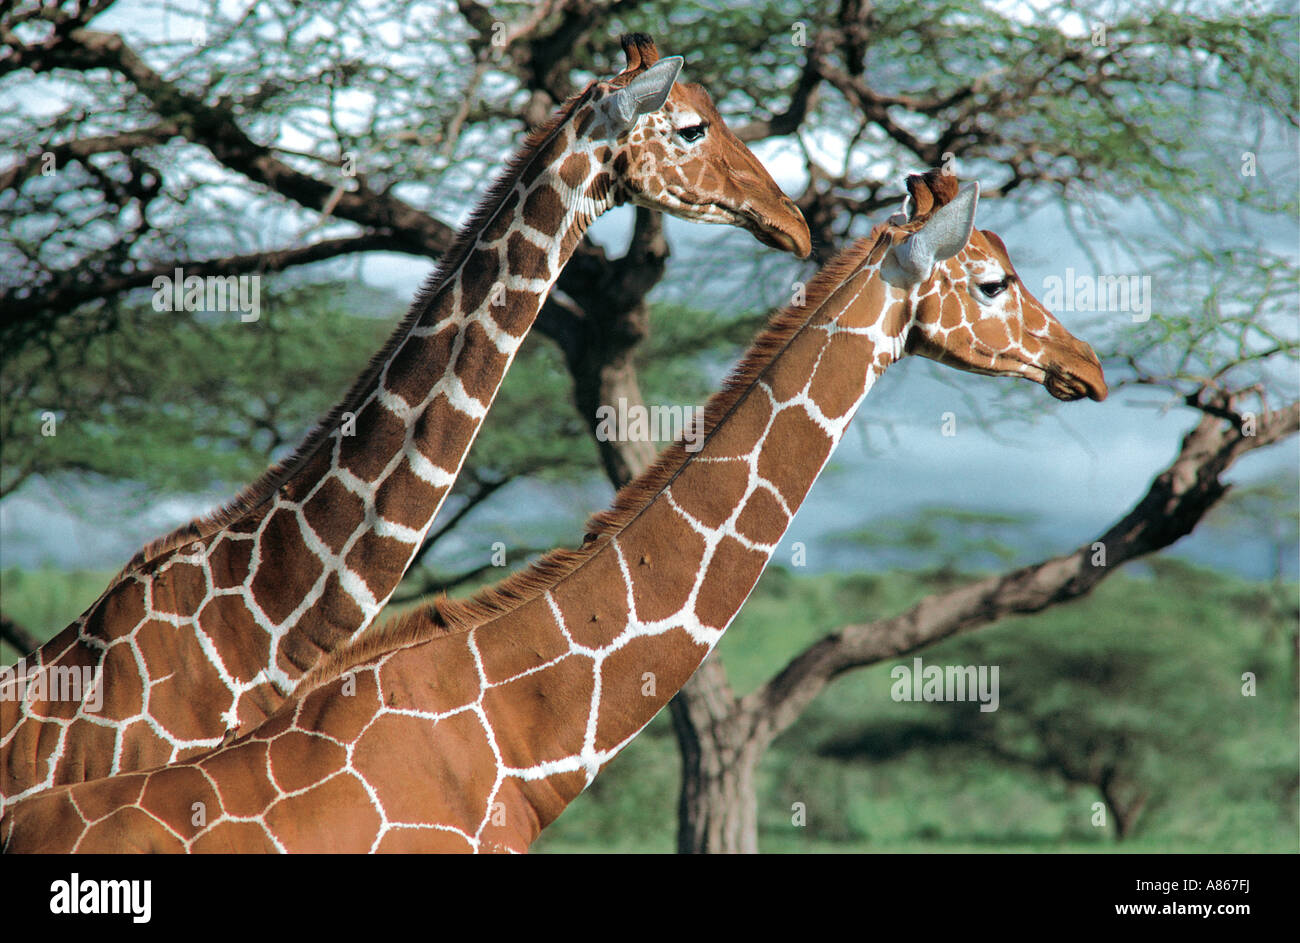 Close up of two Reticulated Giraffe in attentive posture adopted when seeing a predator Samburu National Reserve Kenya Stock Photo